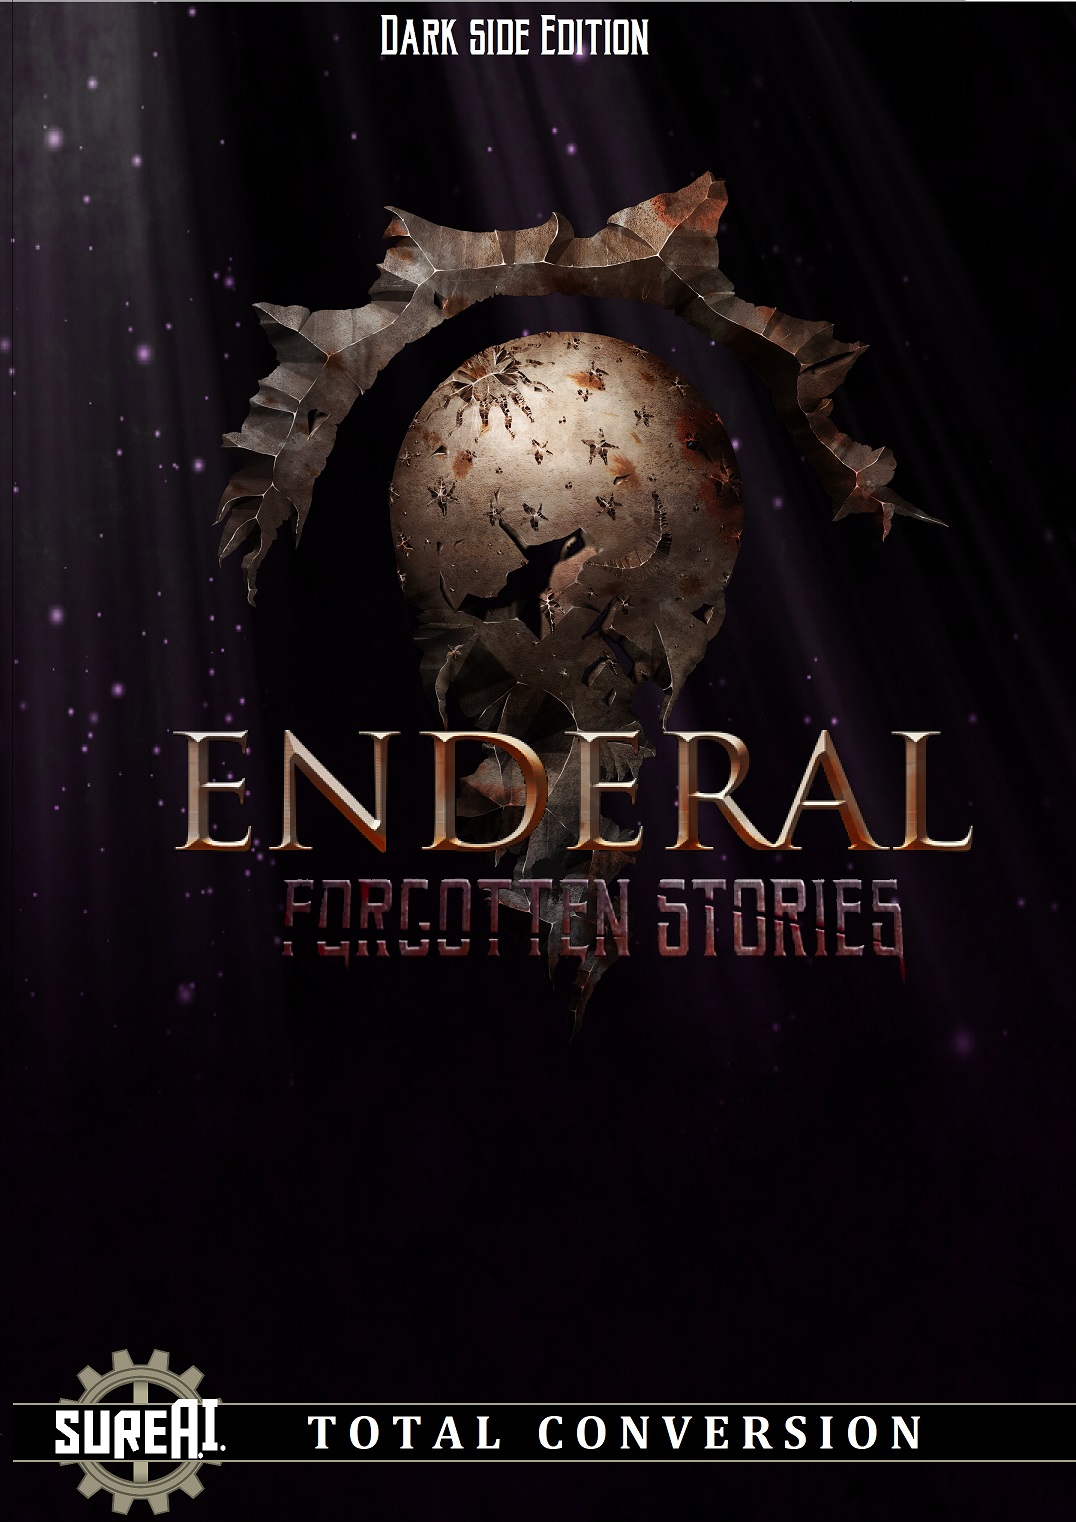 Enderal Dark side DLC Cover.jpg